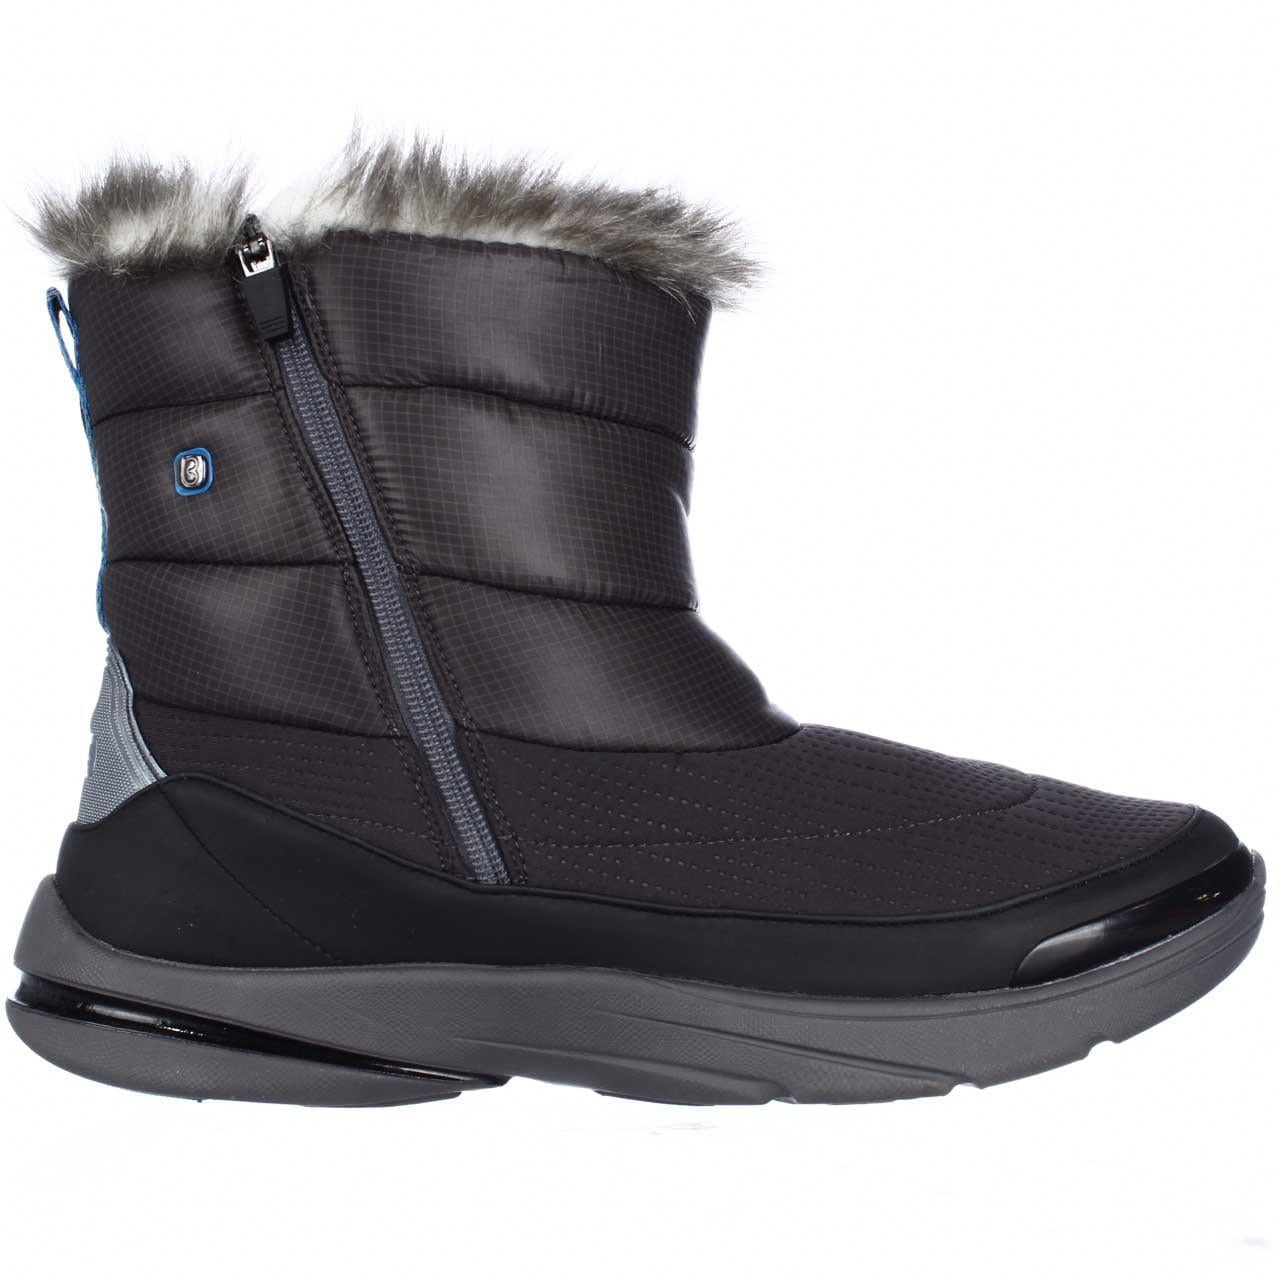 naturalizer women's winter boots